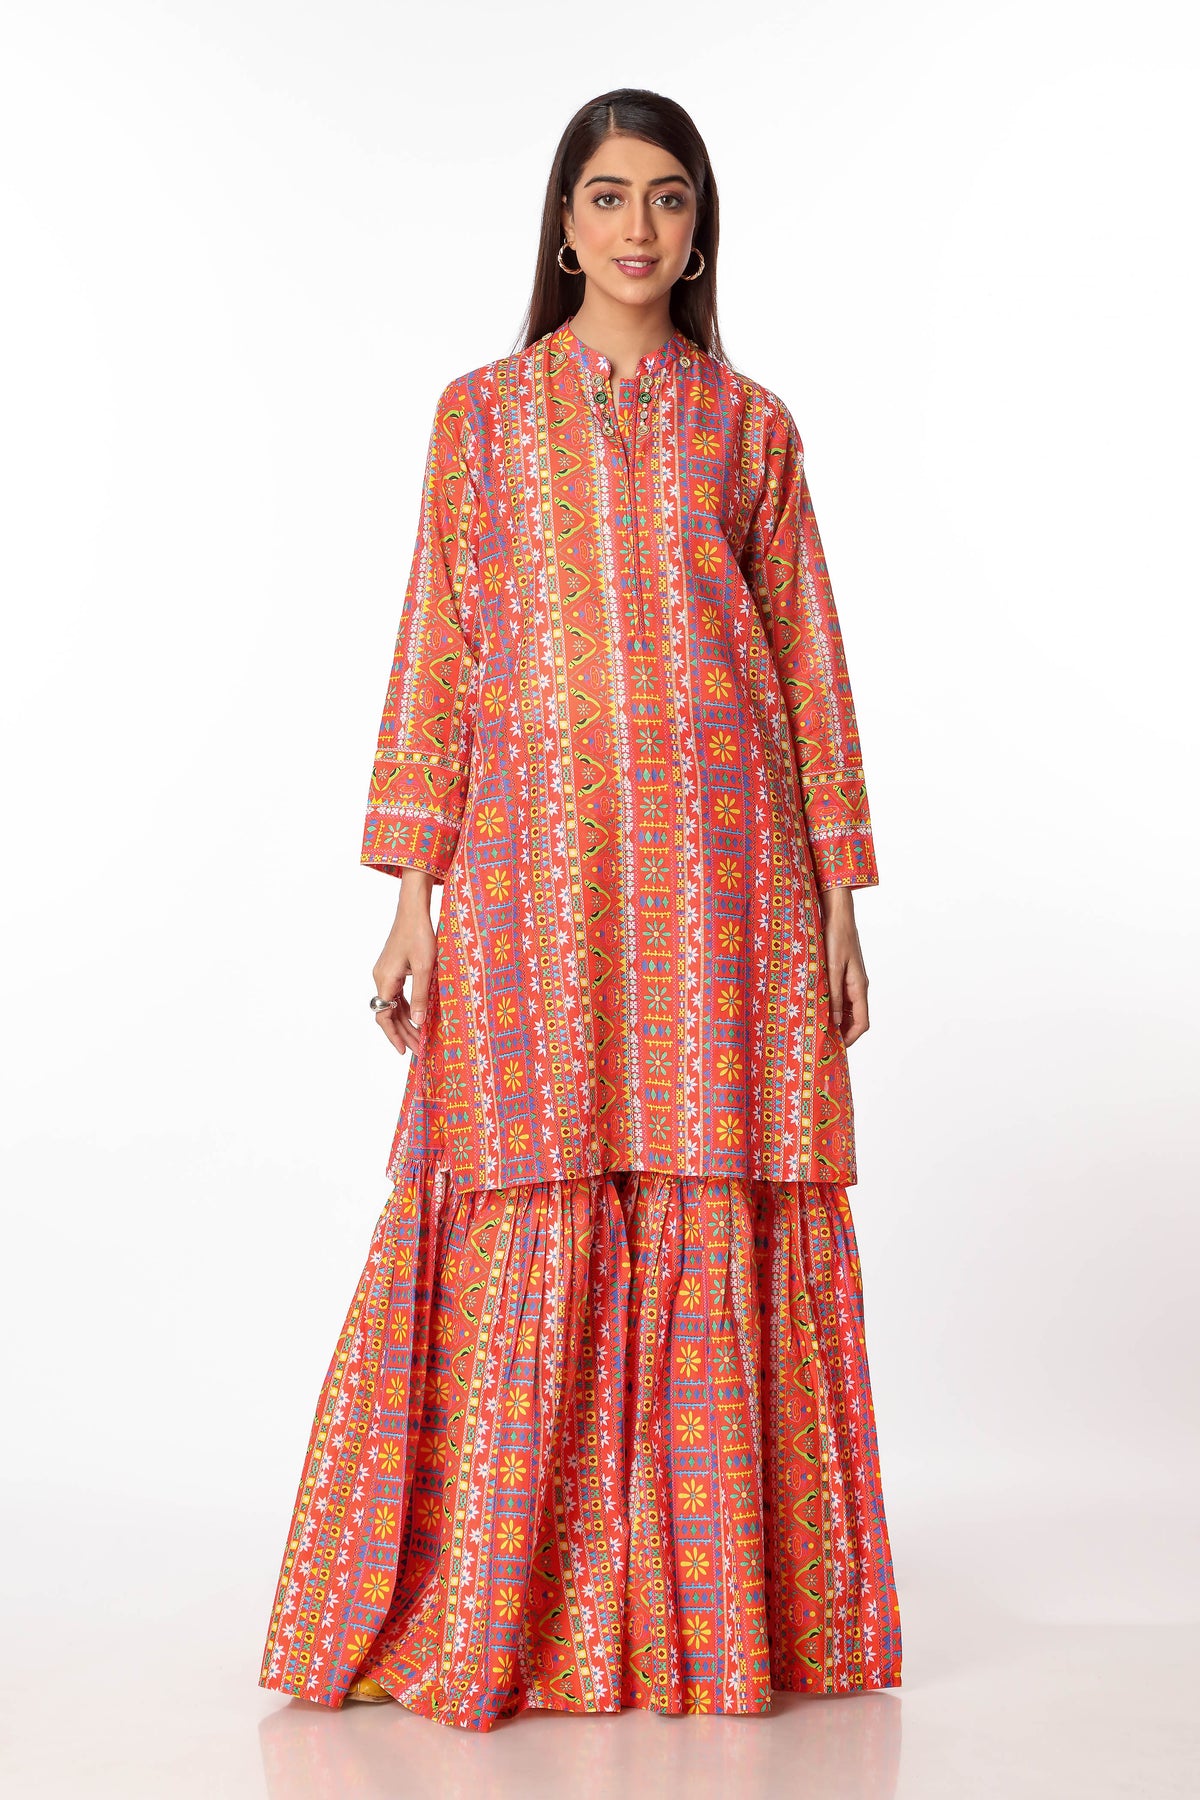 Balochi Pattern in Multi coloured Printed Lawn fabric